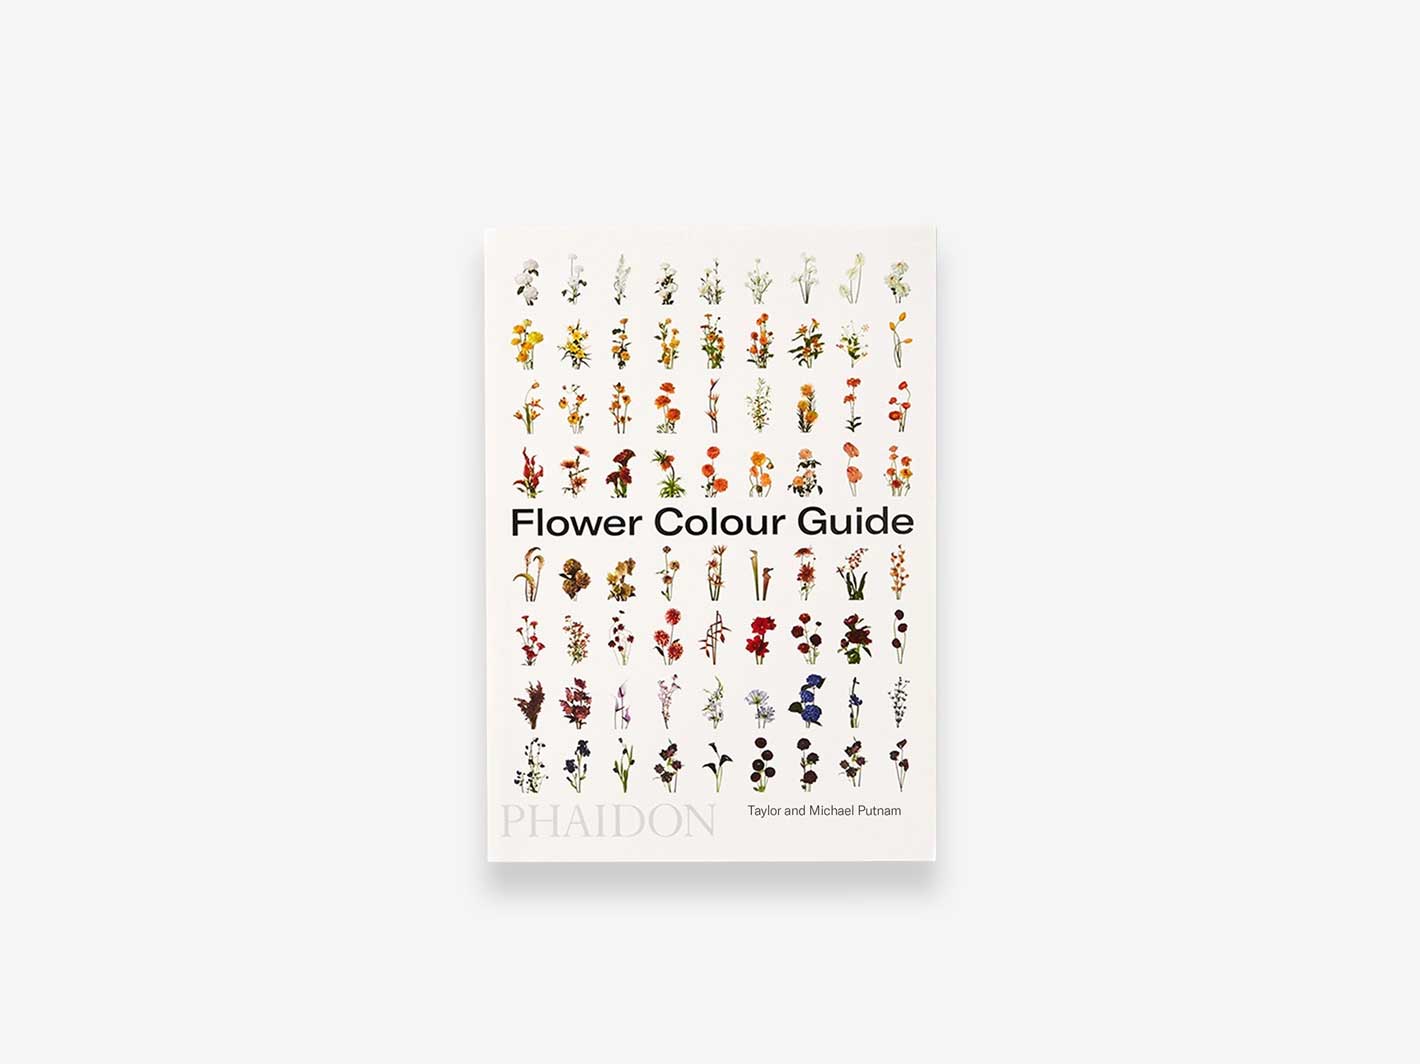 Flower Colour Guide